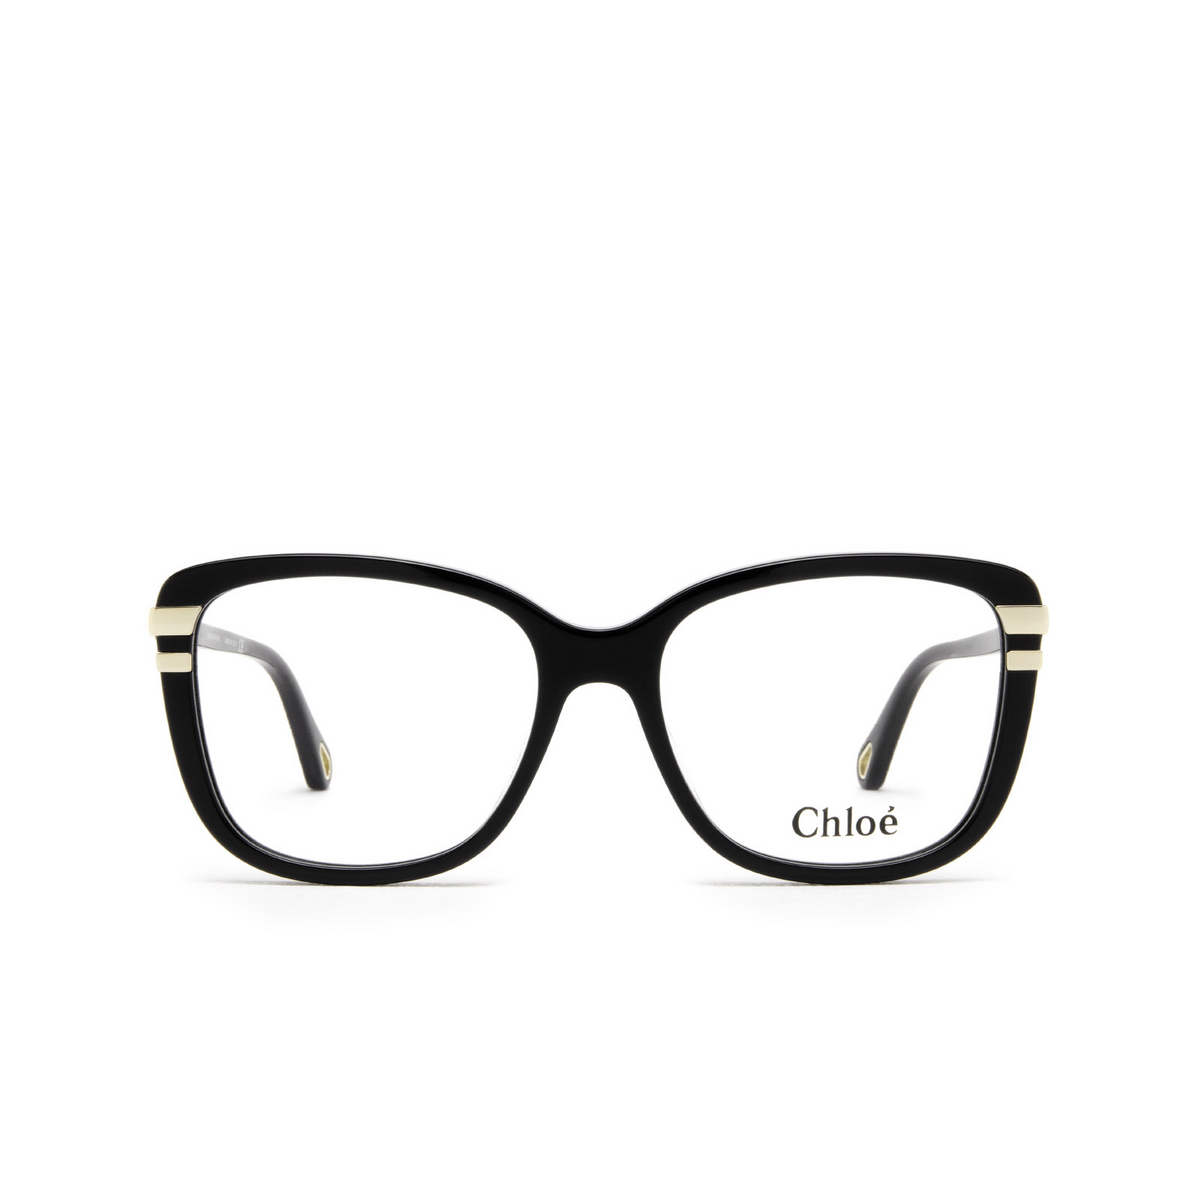 Chloé® Rectangle Eyeglasses: CH0119O color Black 001 - front view.